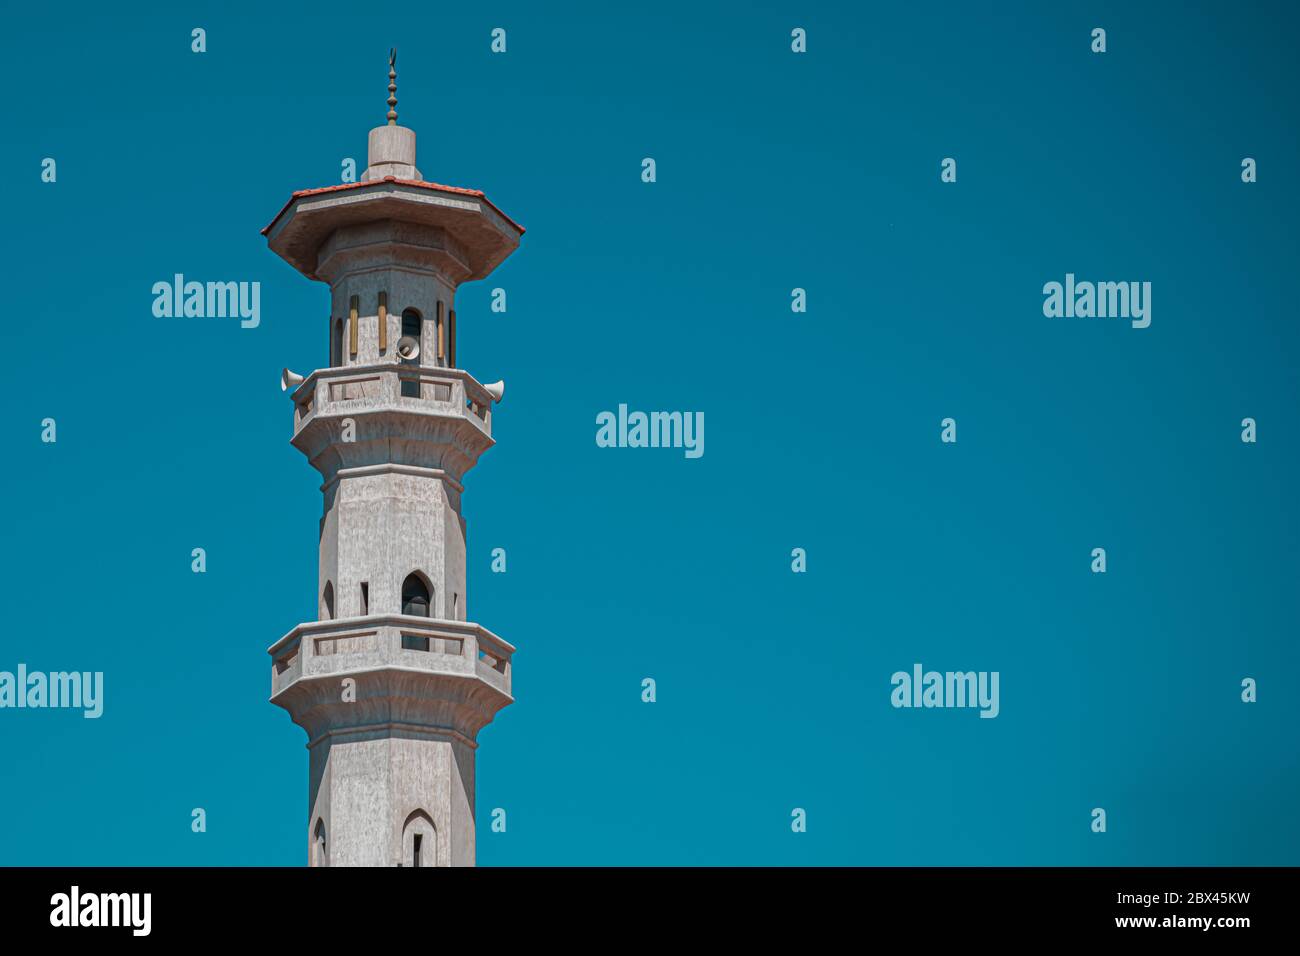 Moschea o Masjid Minareto Arabia Saudita Foto Stock